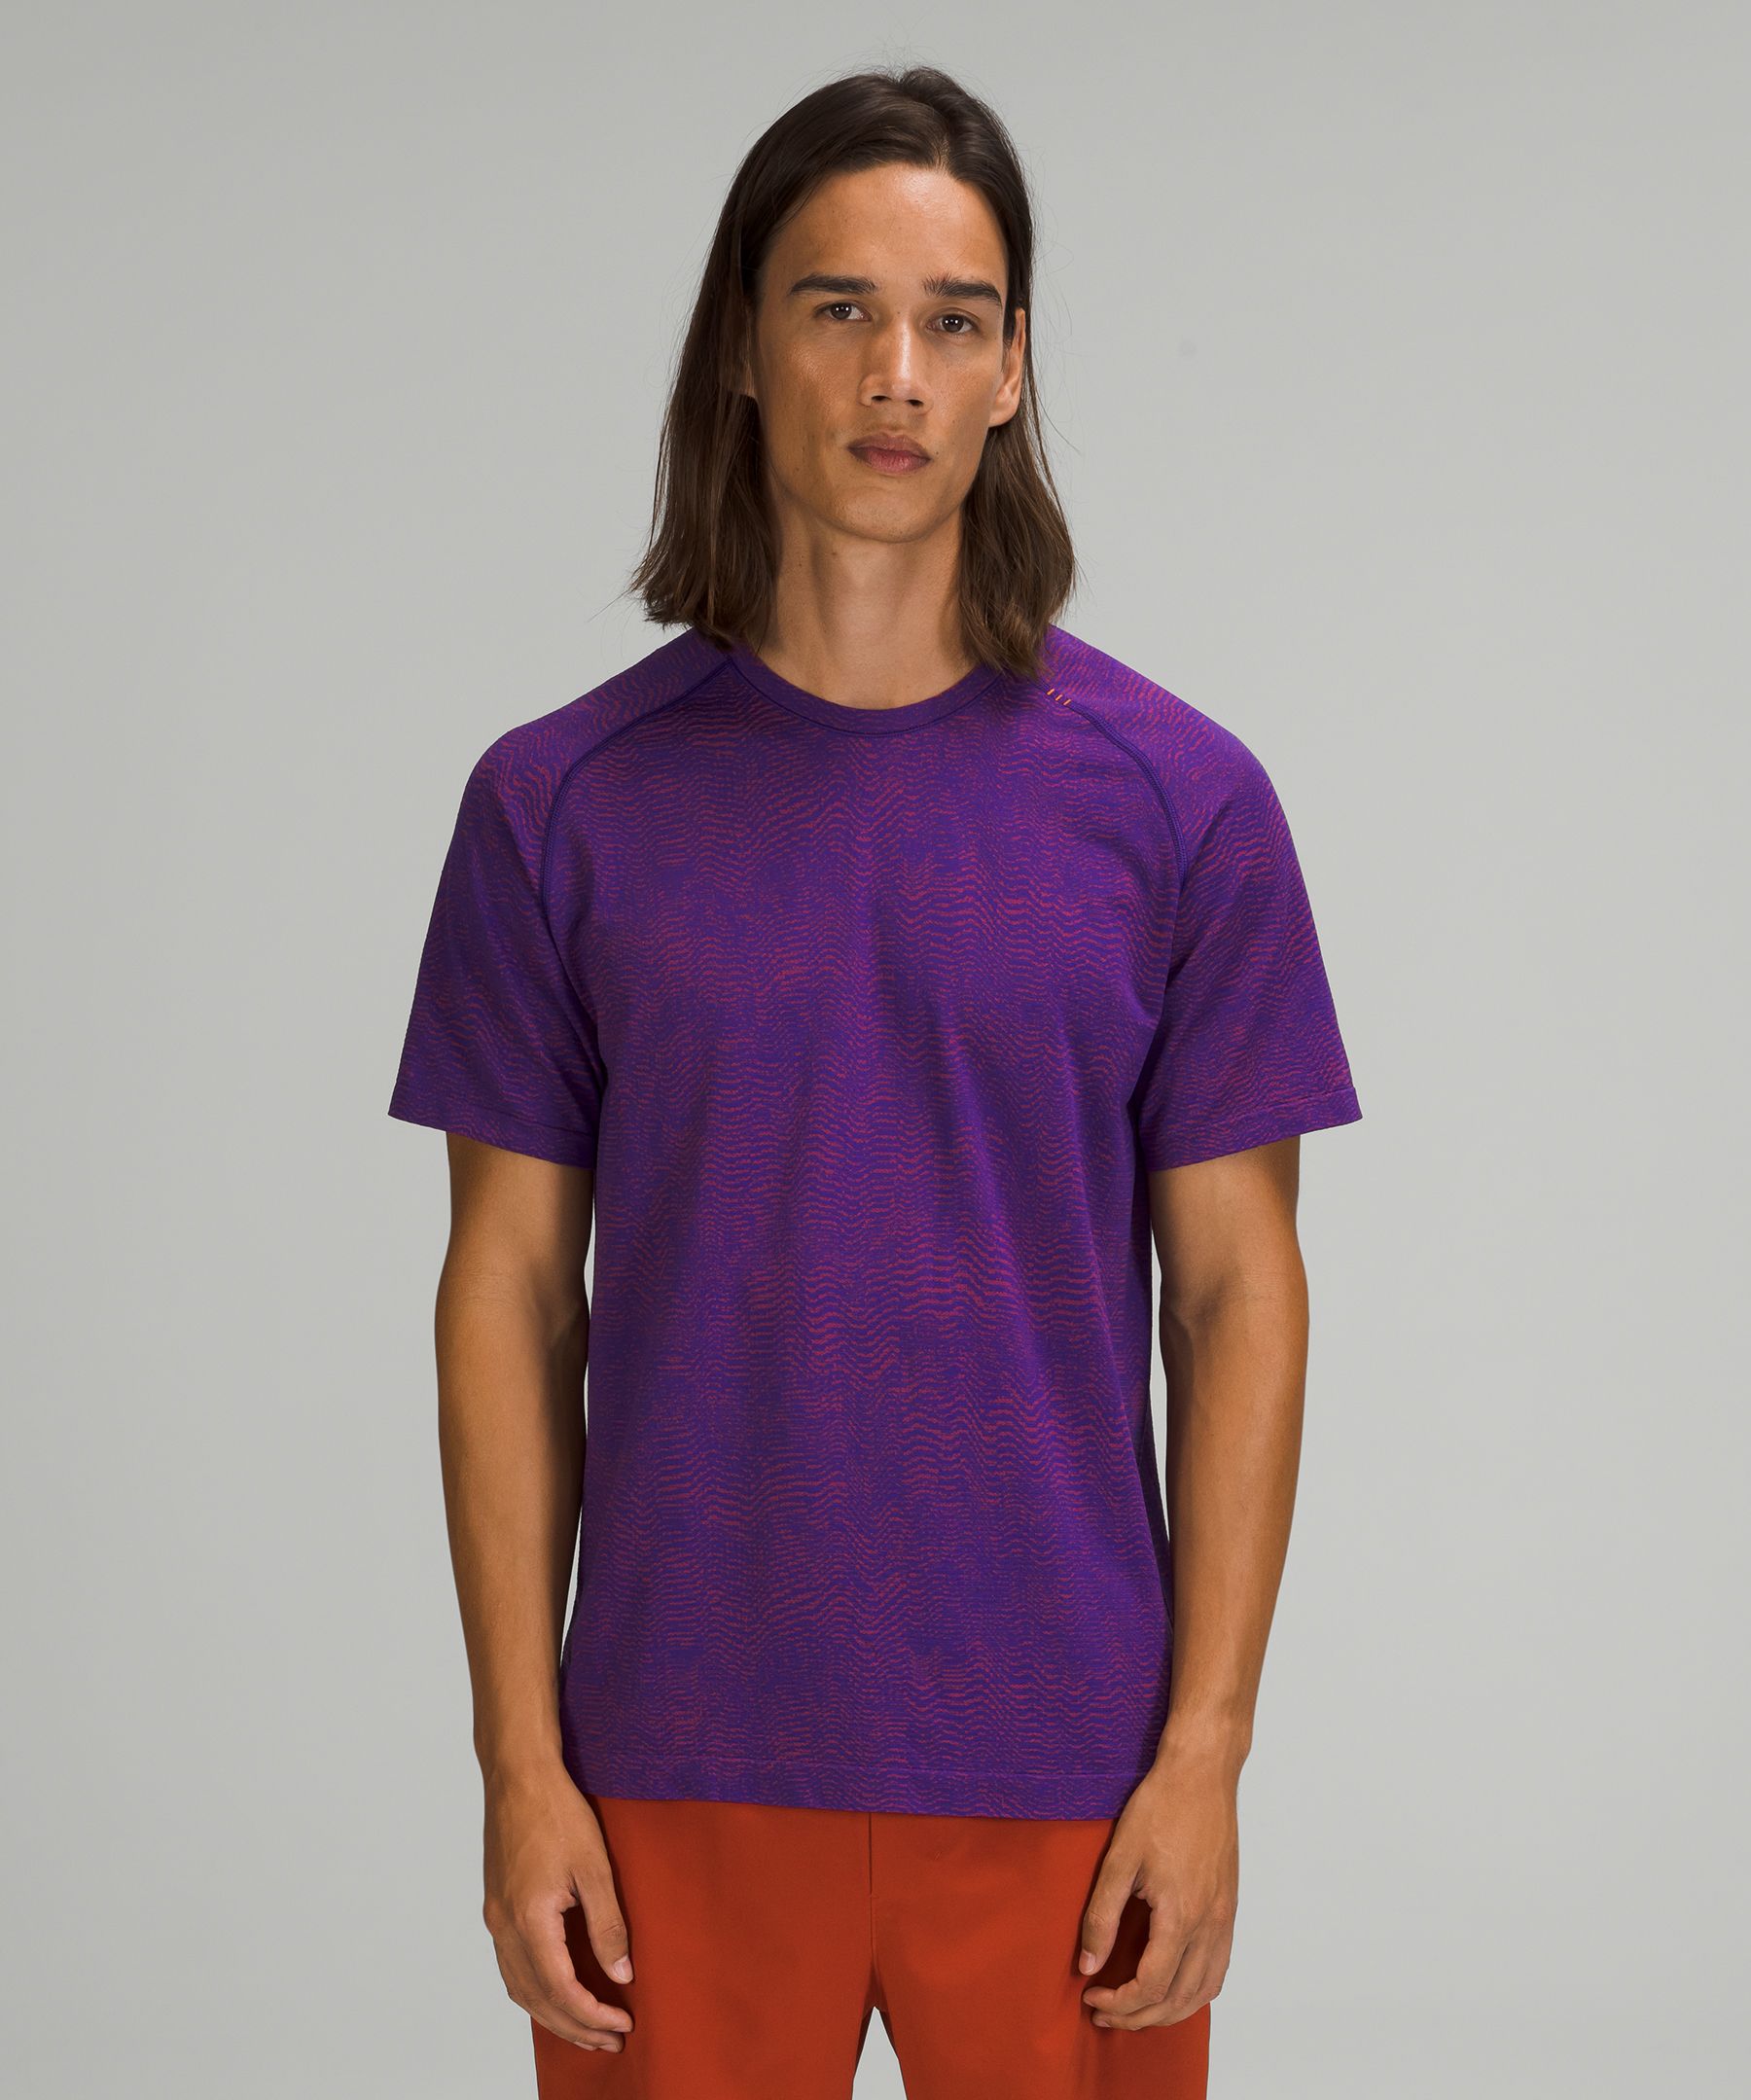 Lululemon Metal Vent Tech T-shirt 2.0 In Ripple Wave Autumn Red/petrol Purple